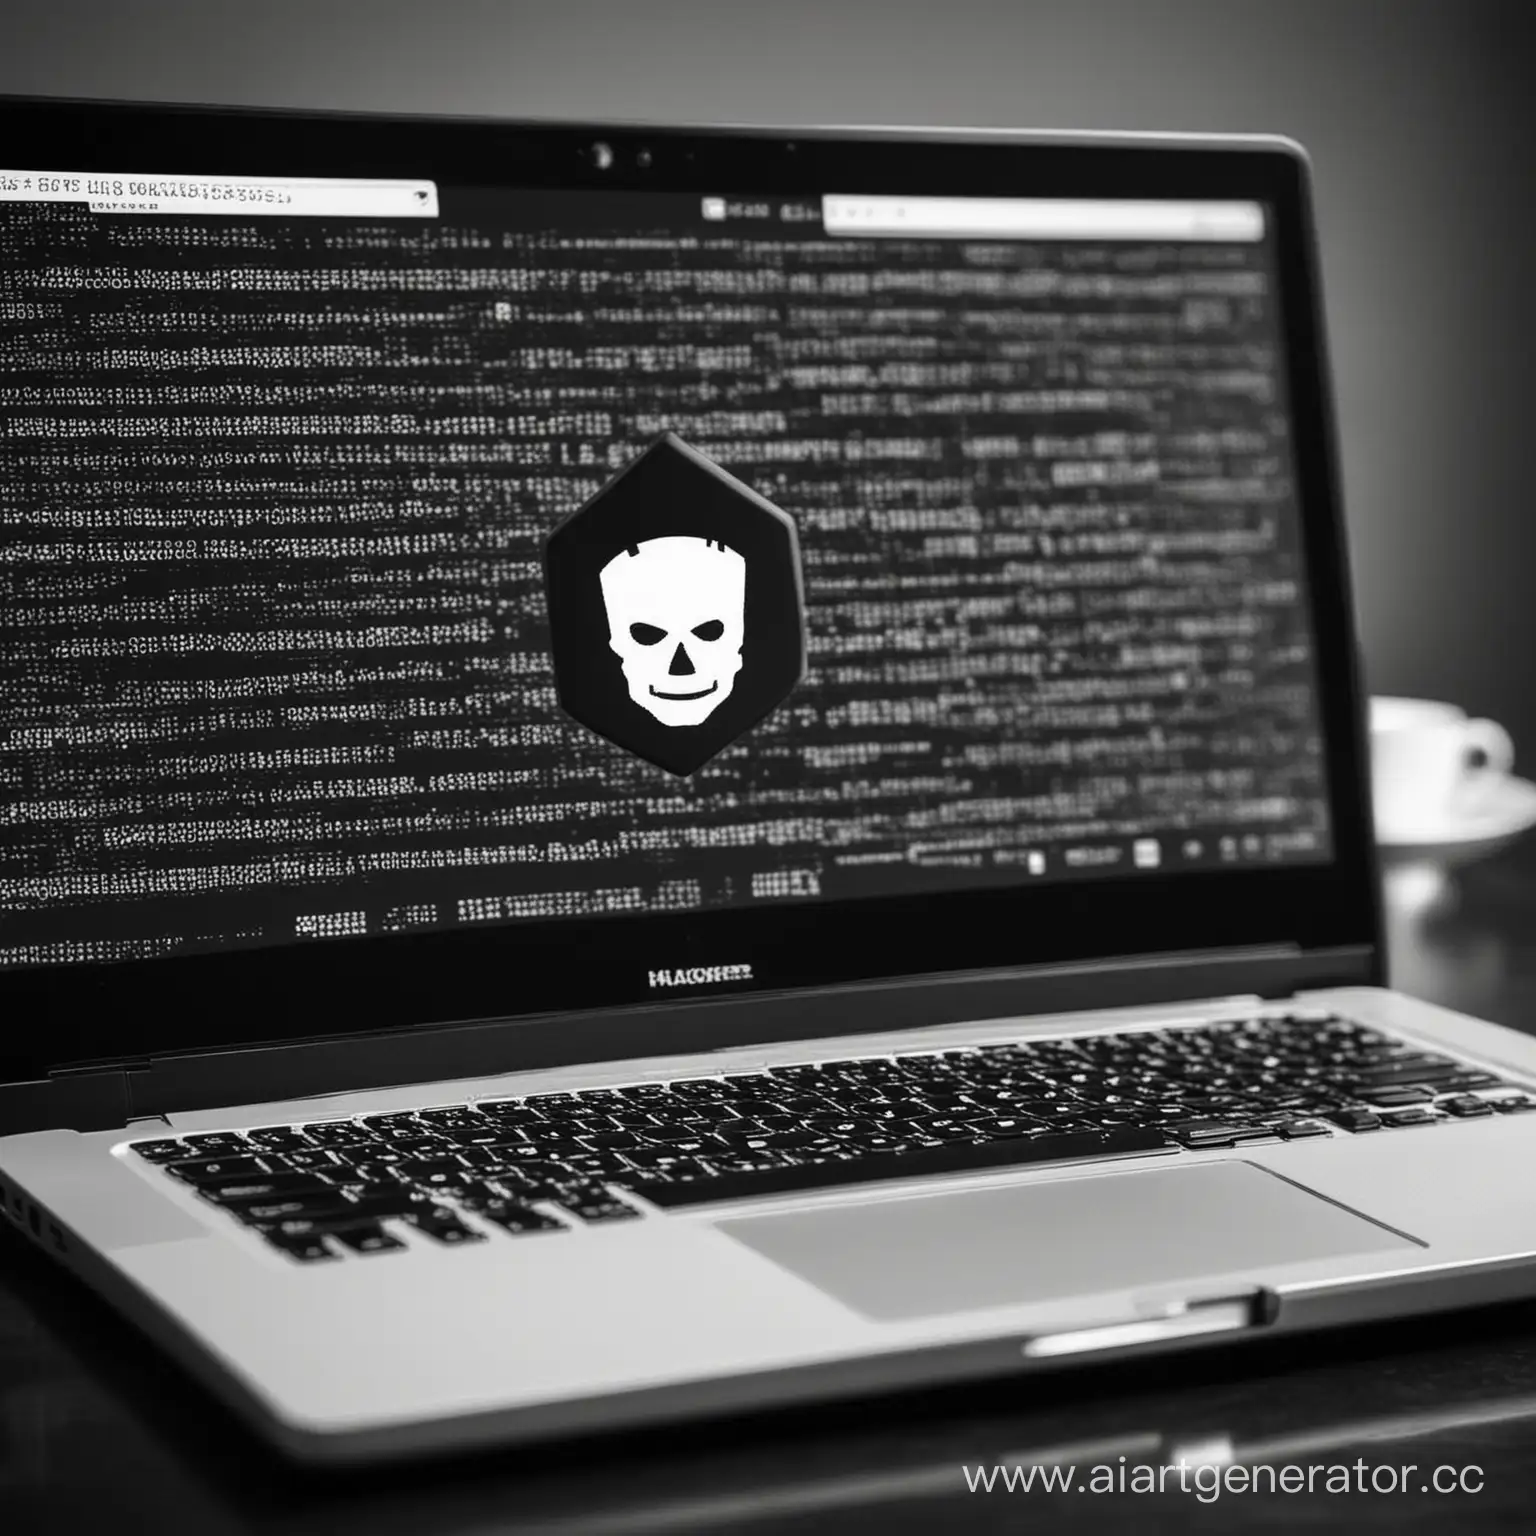 Monochrome-Hacker-Logo-Displayed-on-Laptop-Screen